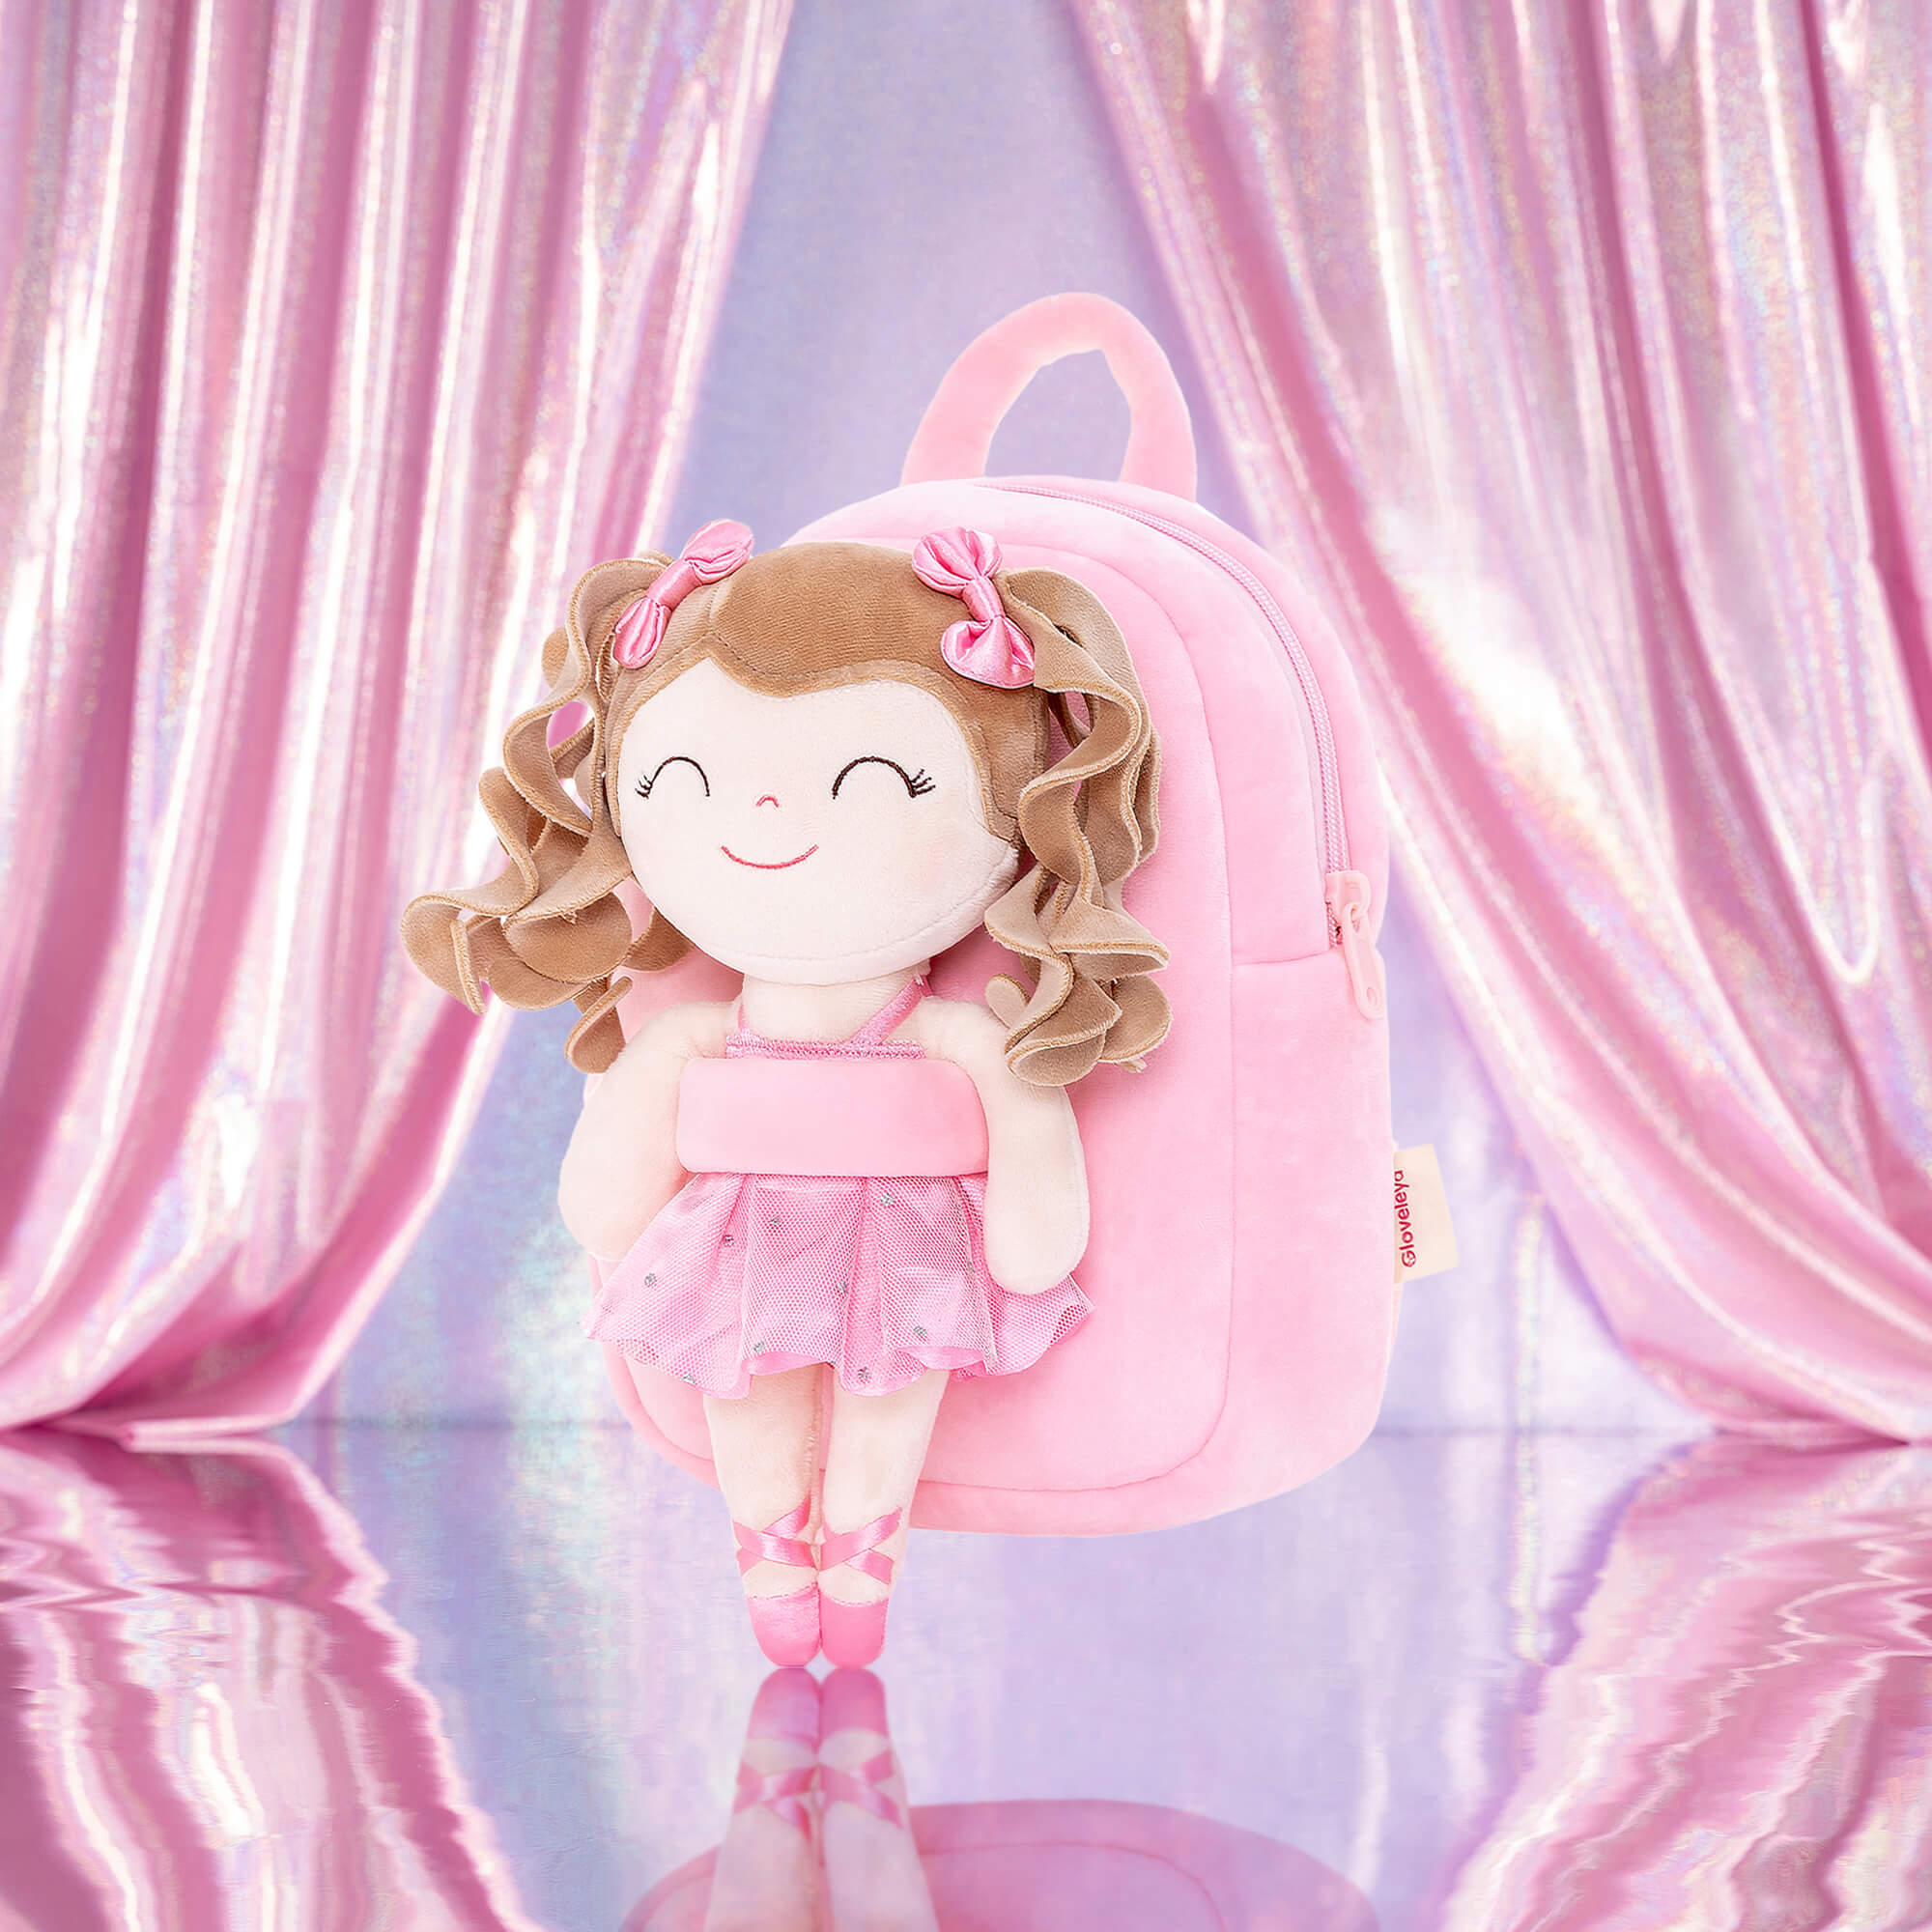 Gloveleya 9-inch Personalized Plush Curly Ballet Girl Dolls Backpack Peach Ballet Dream